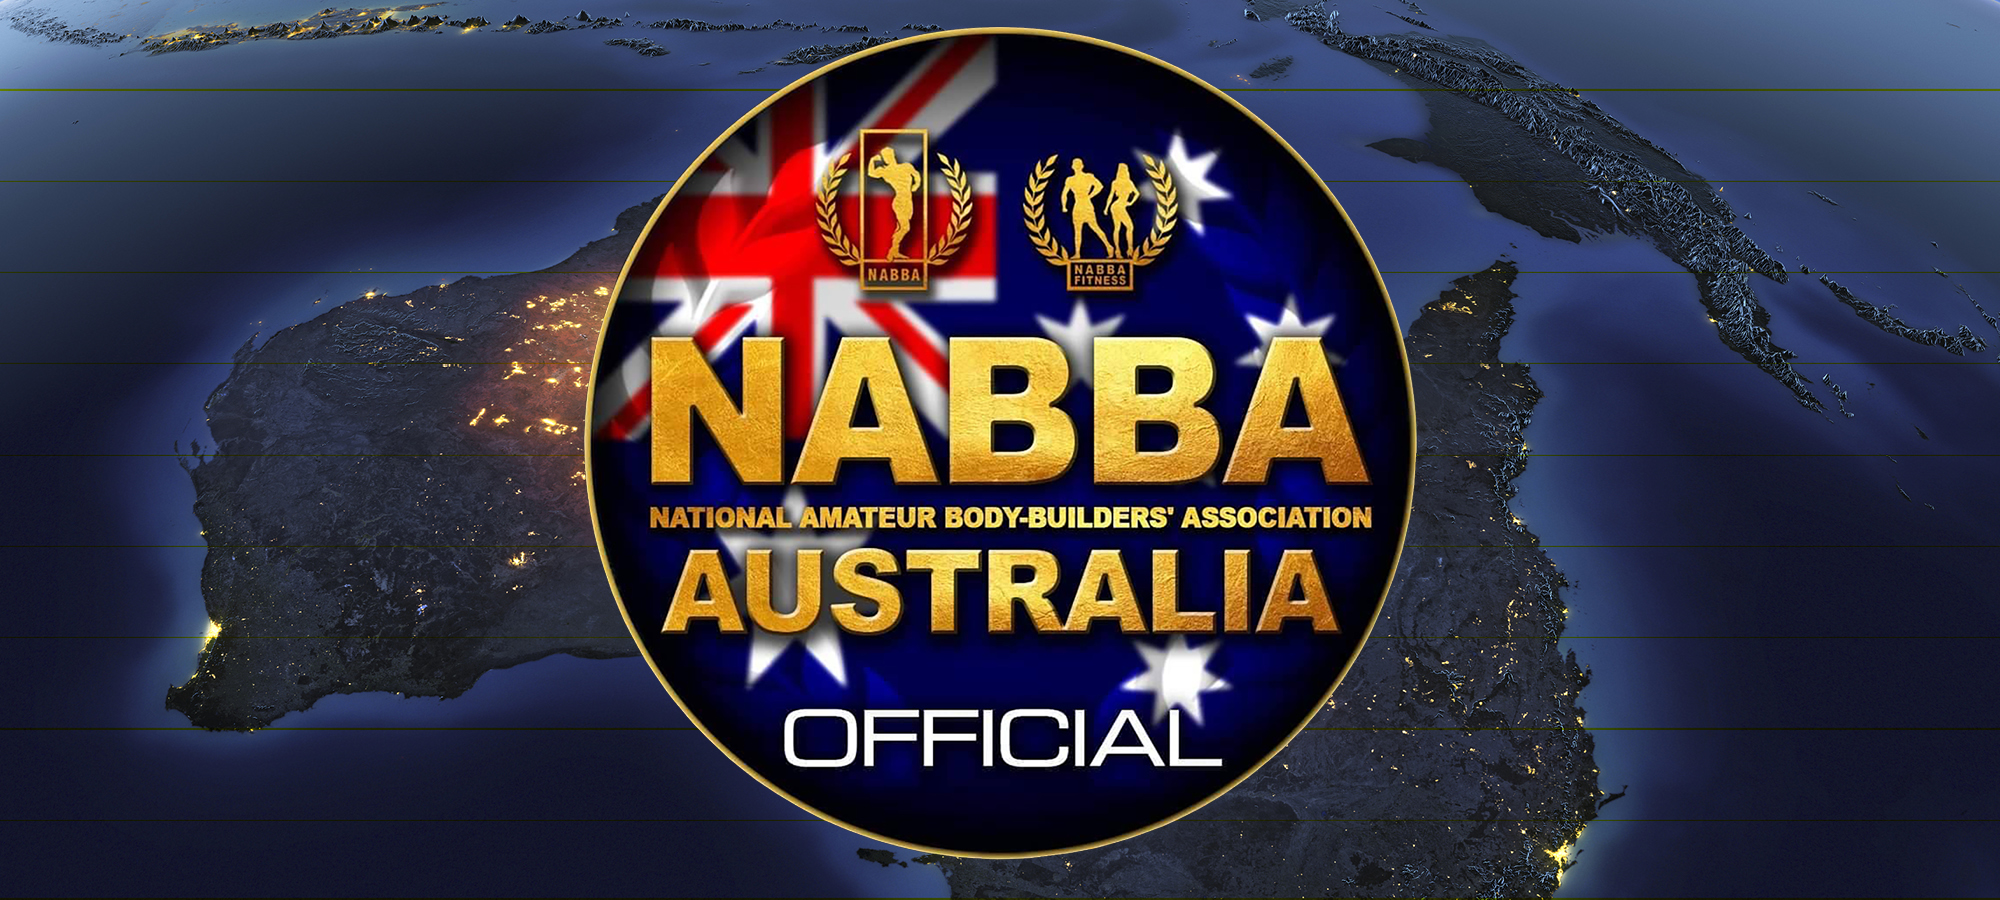 The NABBA Southern Hemisphere Bodybuilding Championships